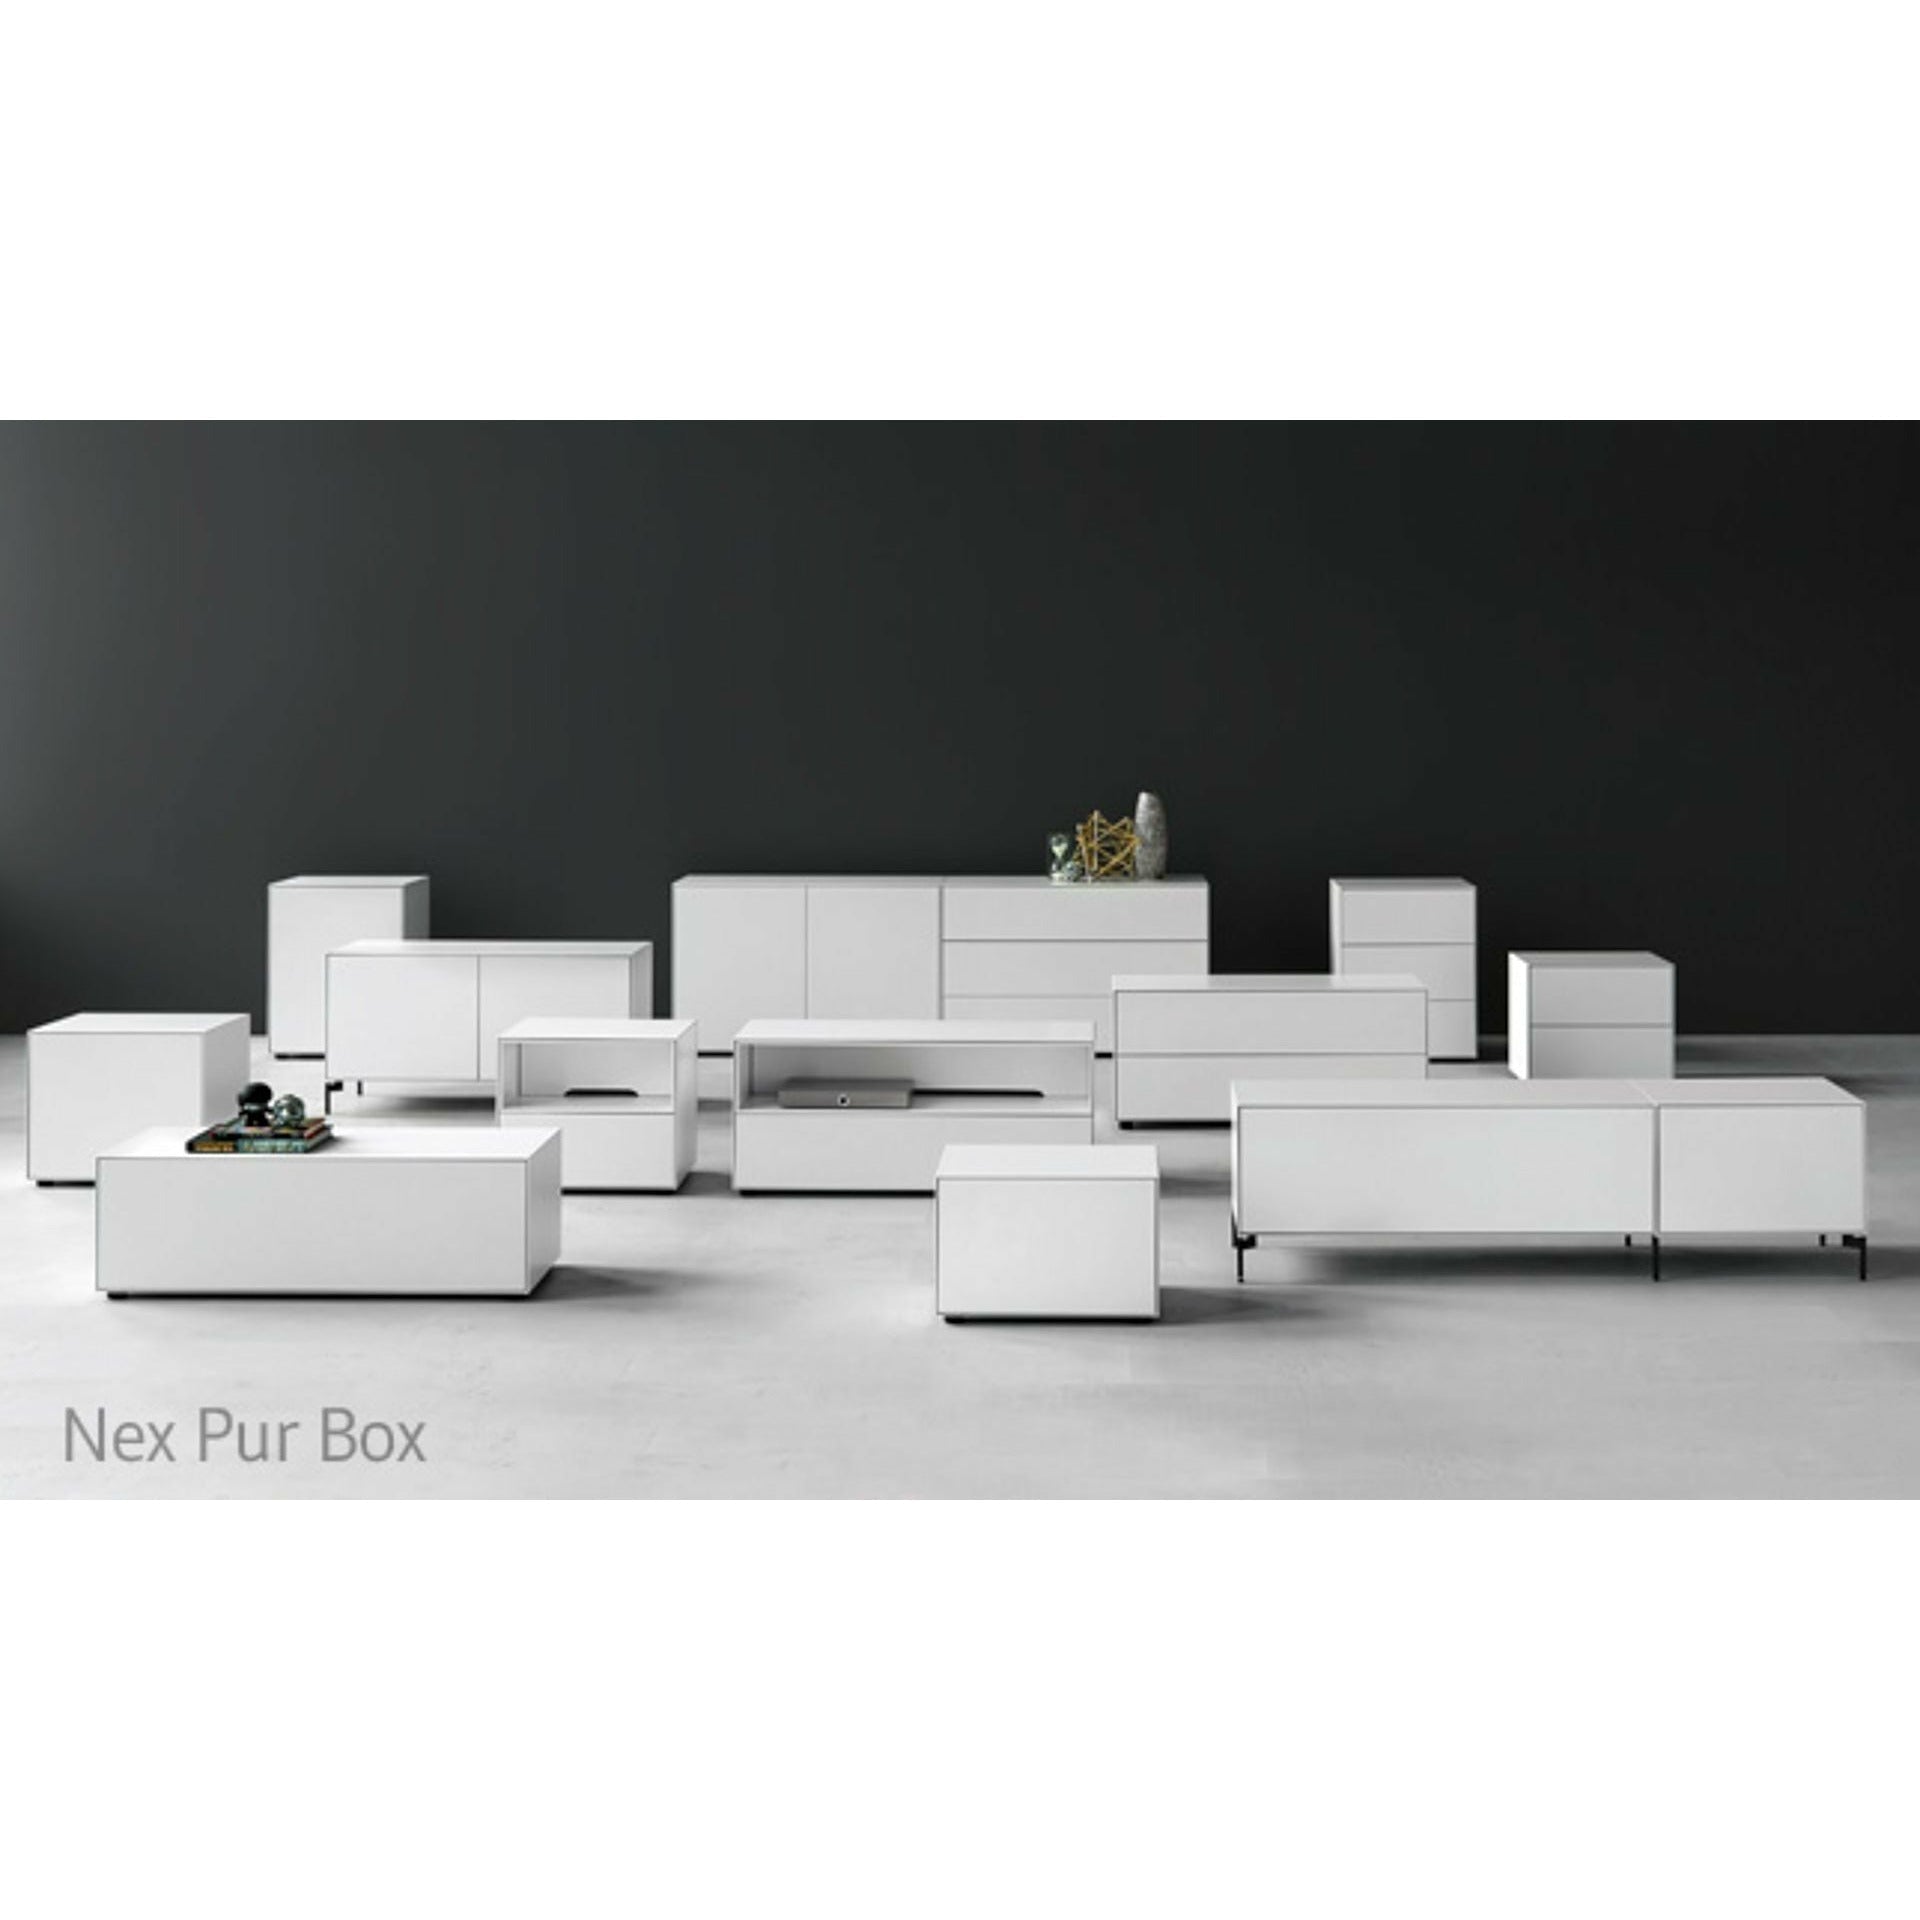 Piure Nex Pur Box Media Flap HX W 37,5x180 cm, 1 hylde